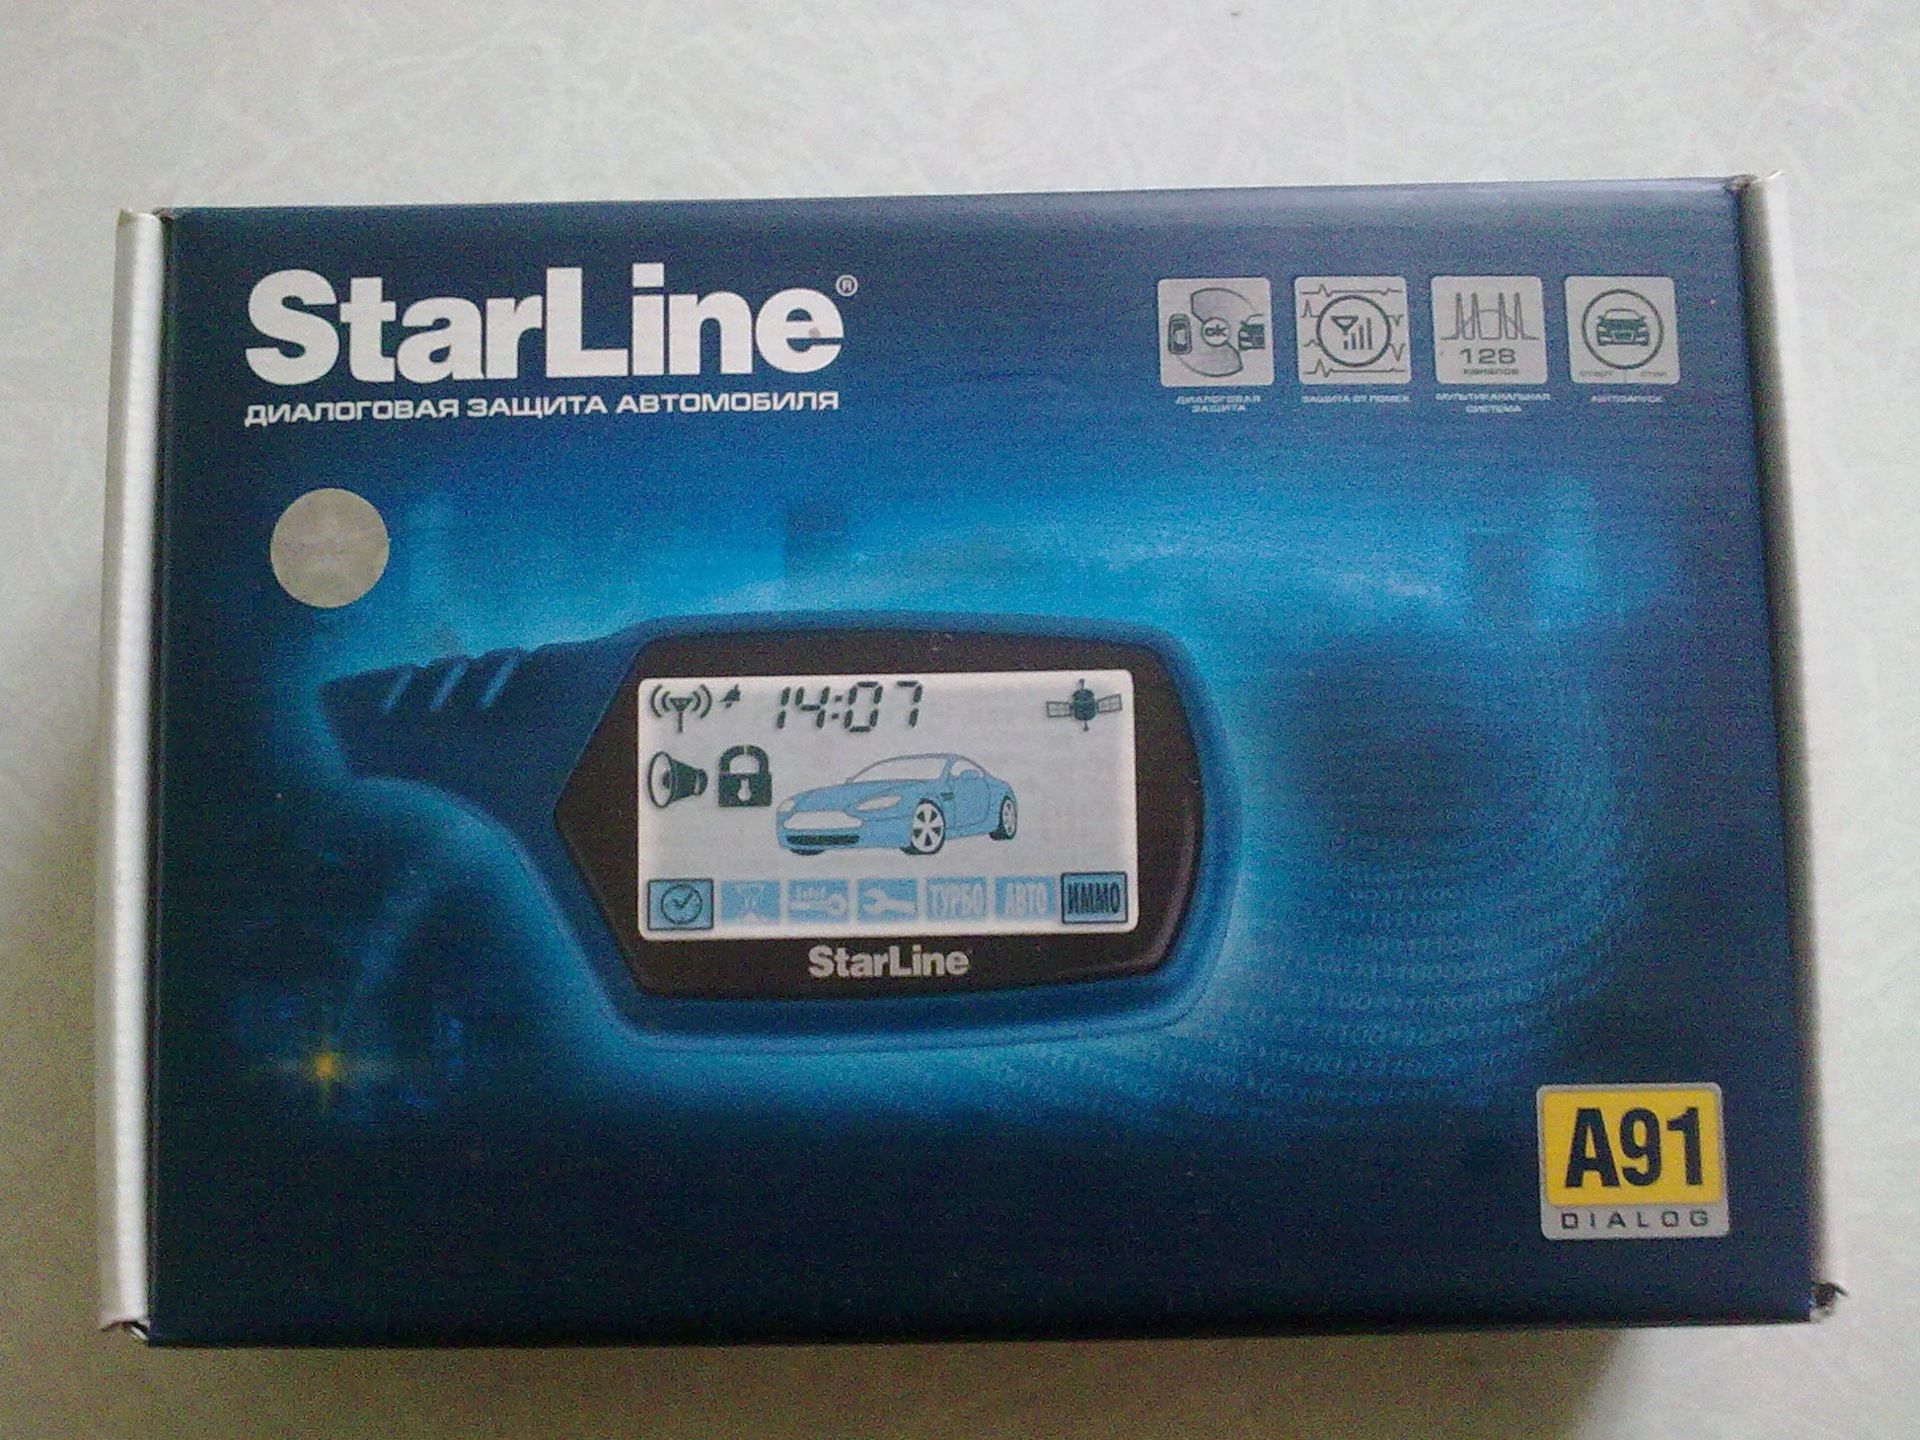 Открой навык starline. Сигнализация STARLINE FCC ID njqep02. Брелок сигнализации STARLINE 2way-Remo. Старлайн njqep02 модель. Сигнализация STARLINE С автозапуском модели.